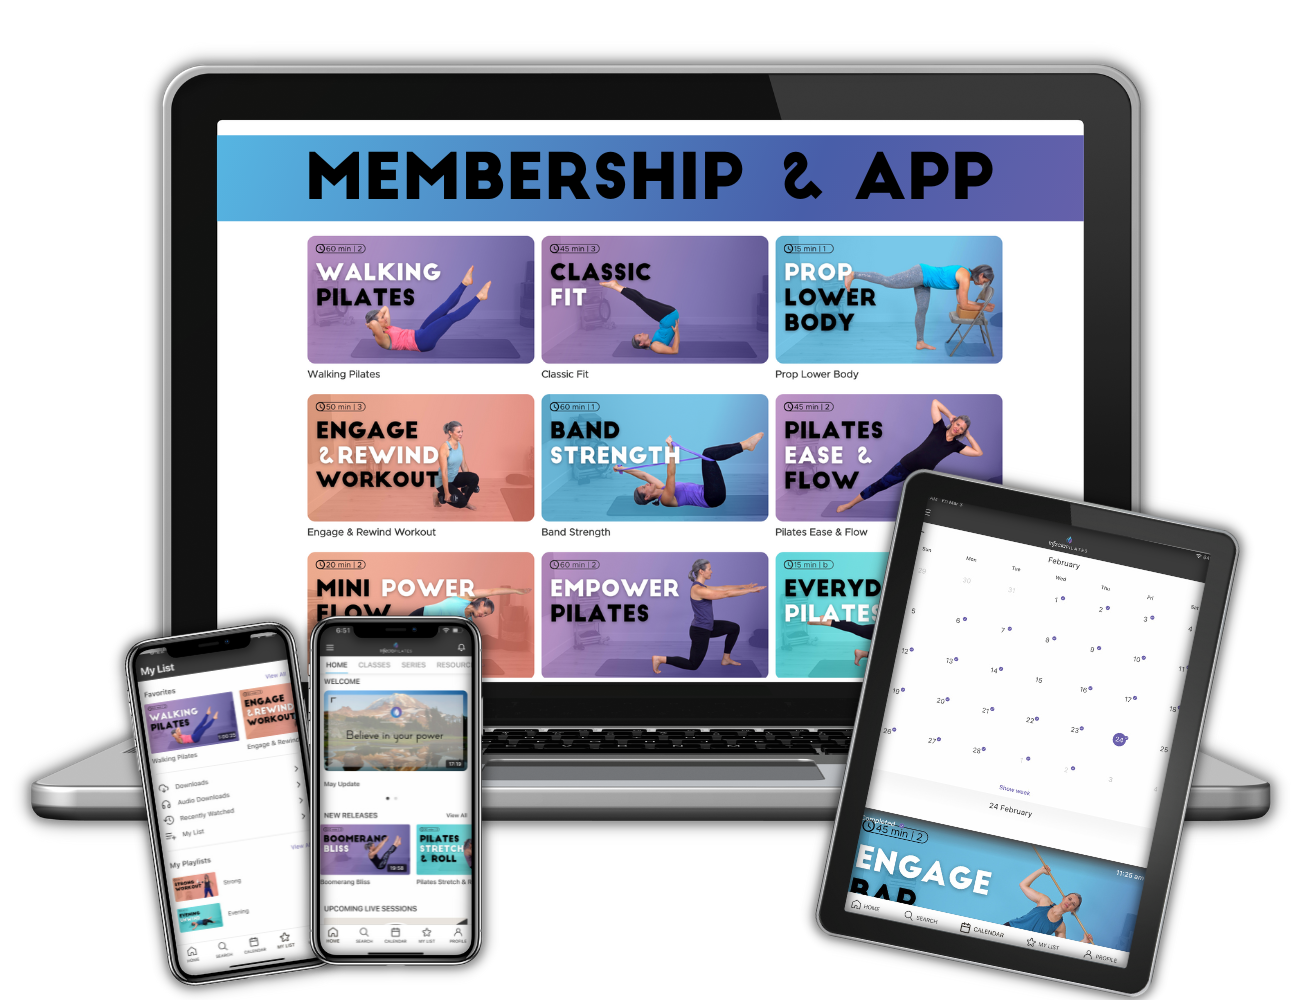 Images of Trifecta Pilates Membership and App